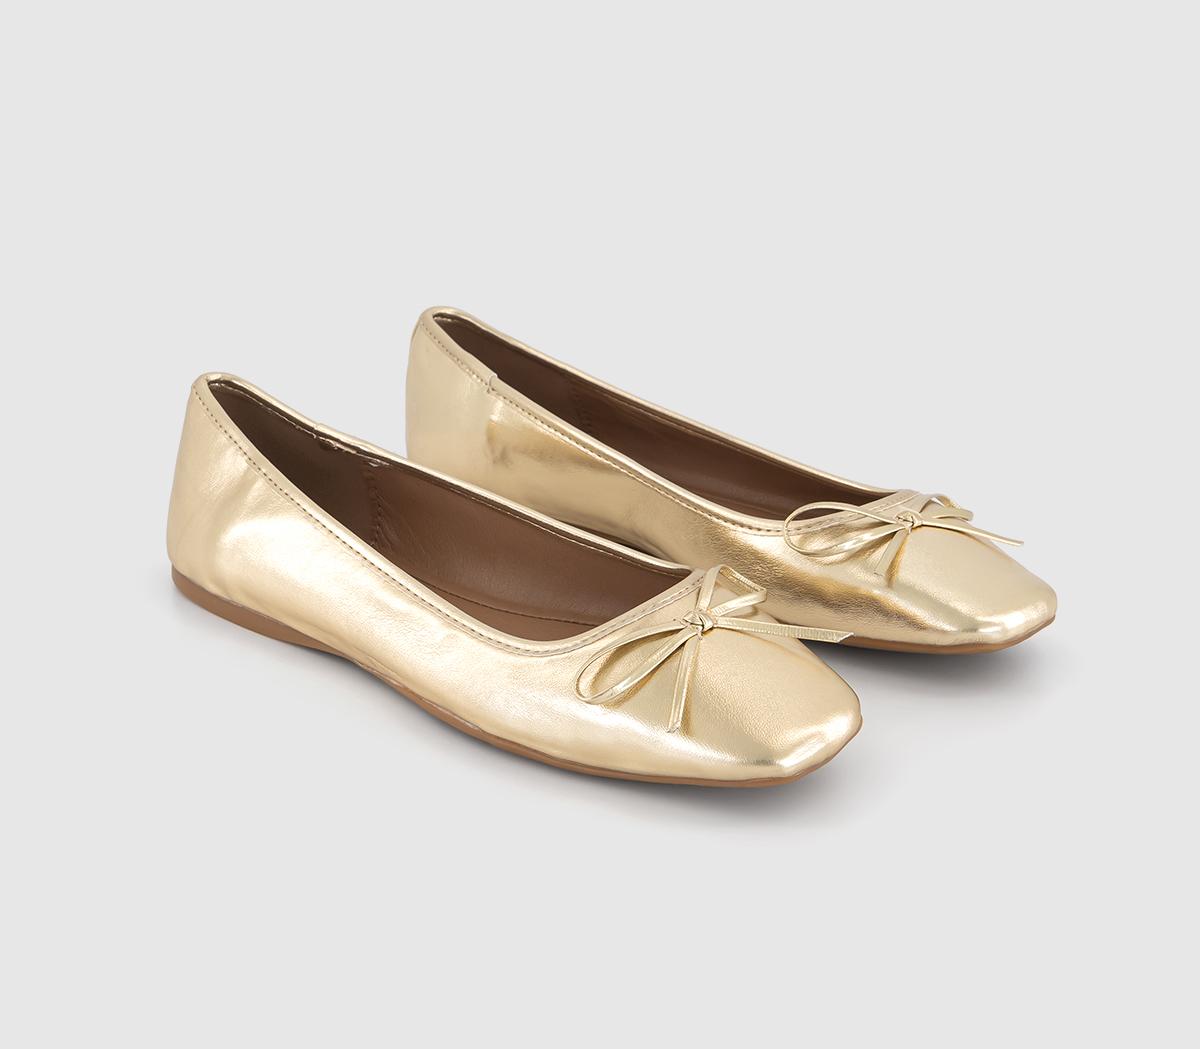 OFFICE Womens Five Star Square Toe Ballerina Shoes Gold Metalic Multi, 4